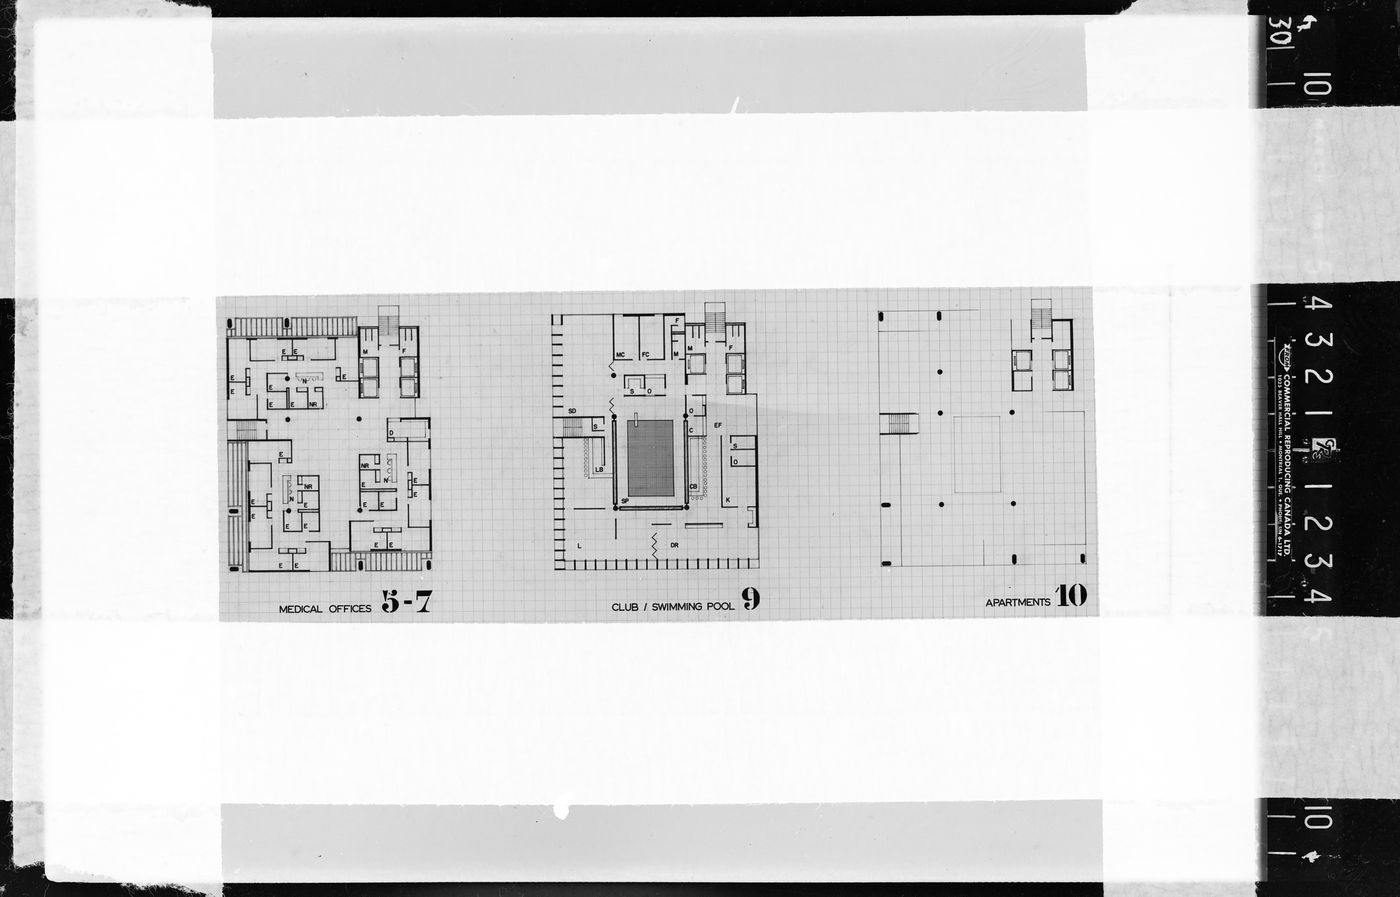 Plans for Van Horne Building